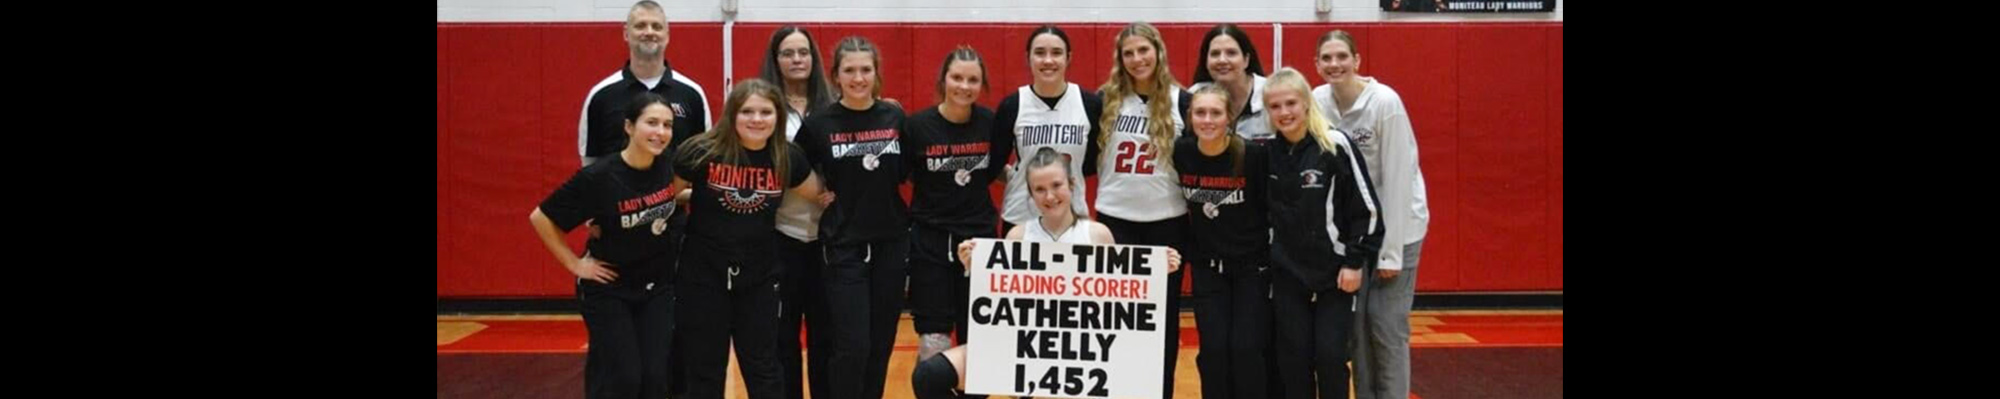 Girls basketball team celebrating teammate, Catherine as 